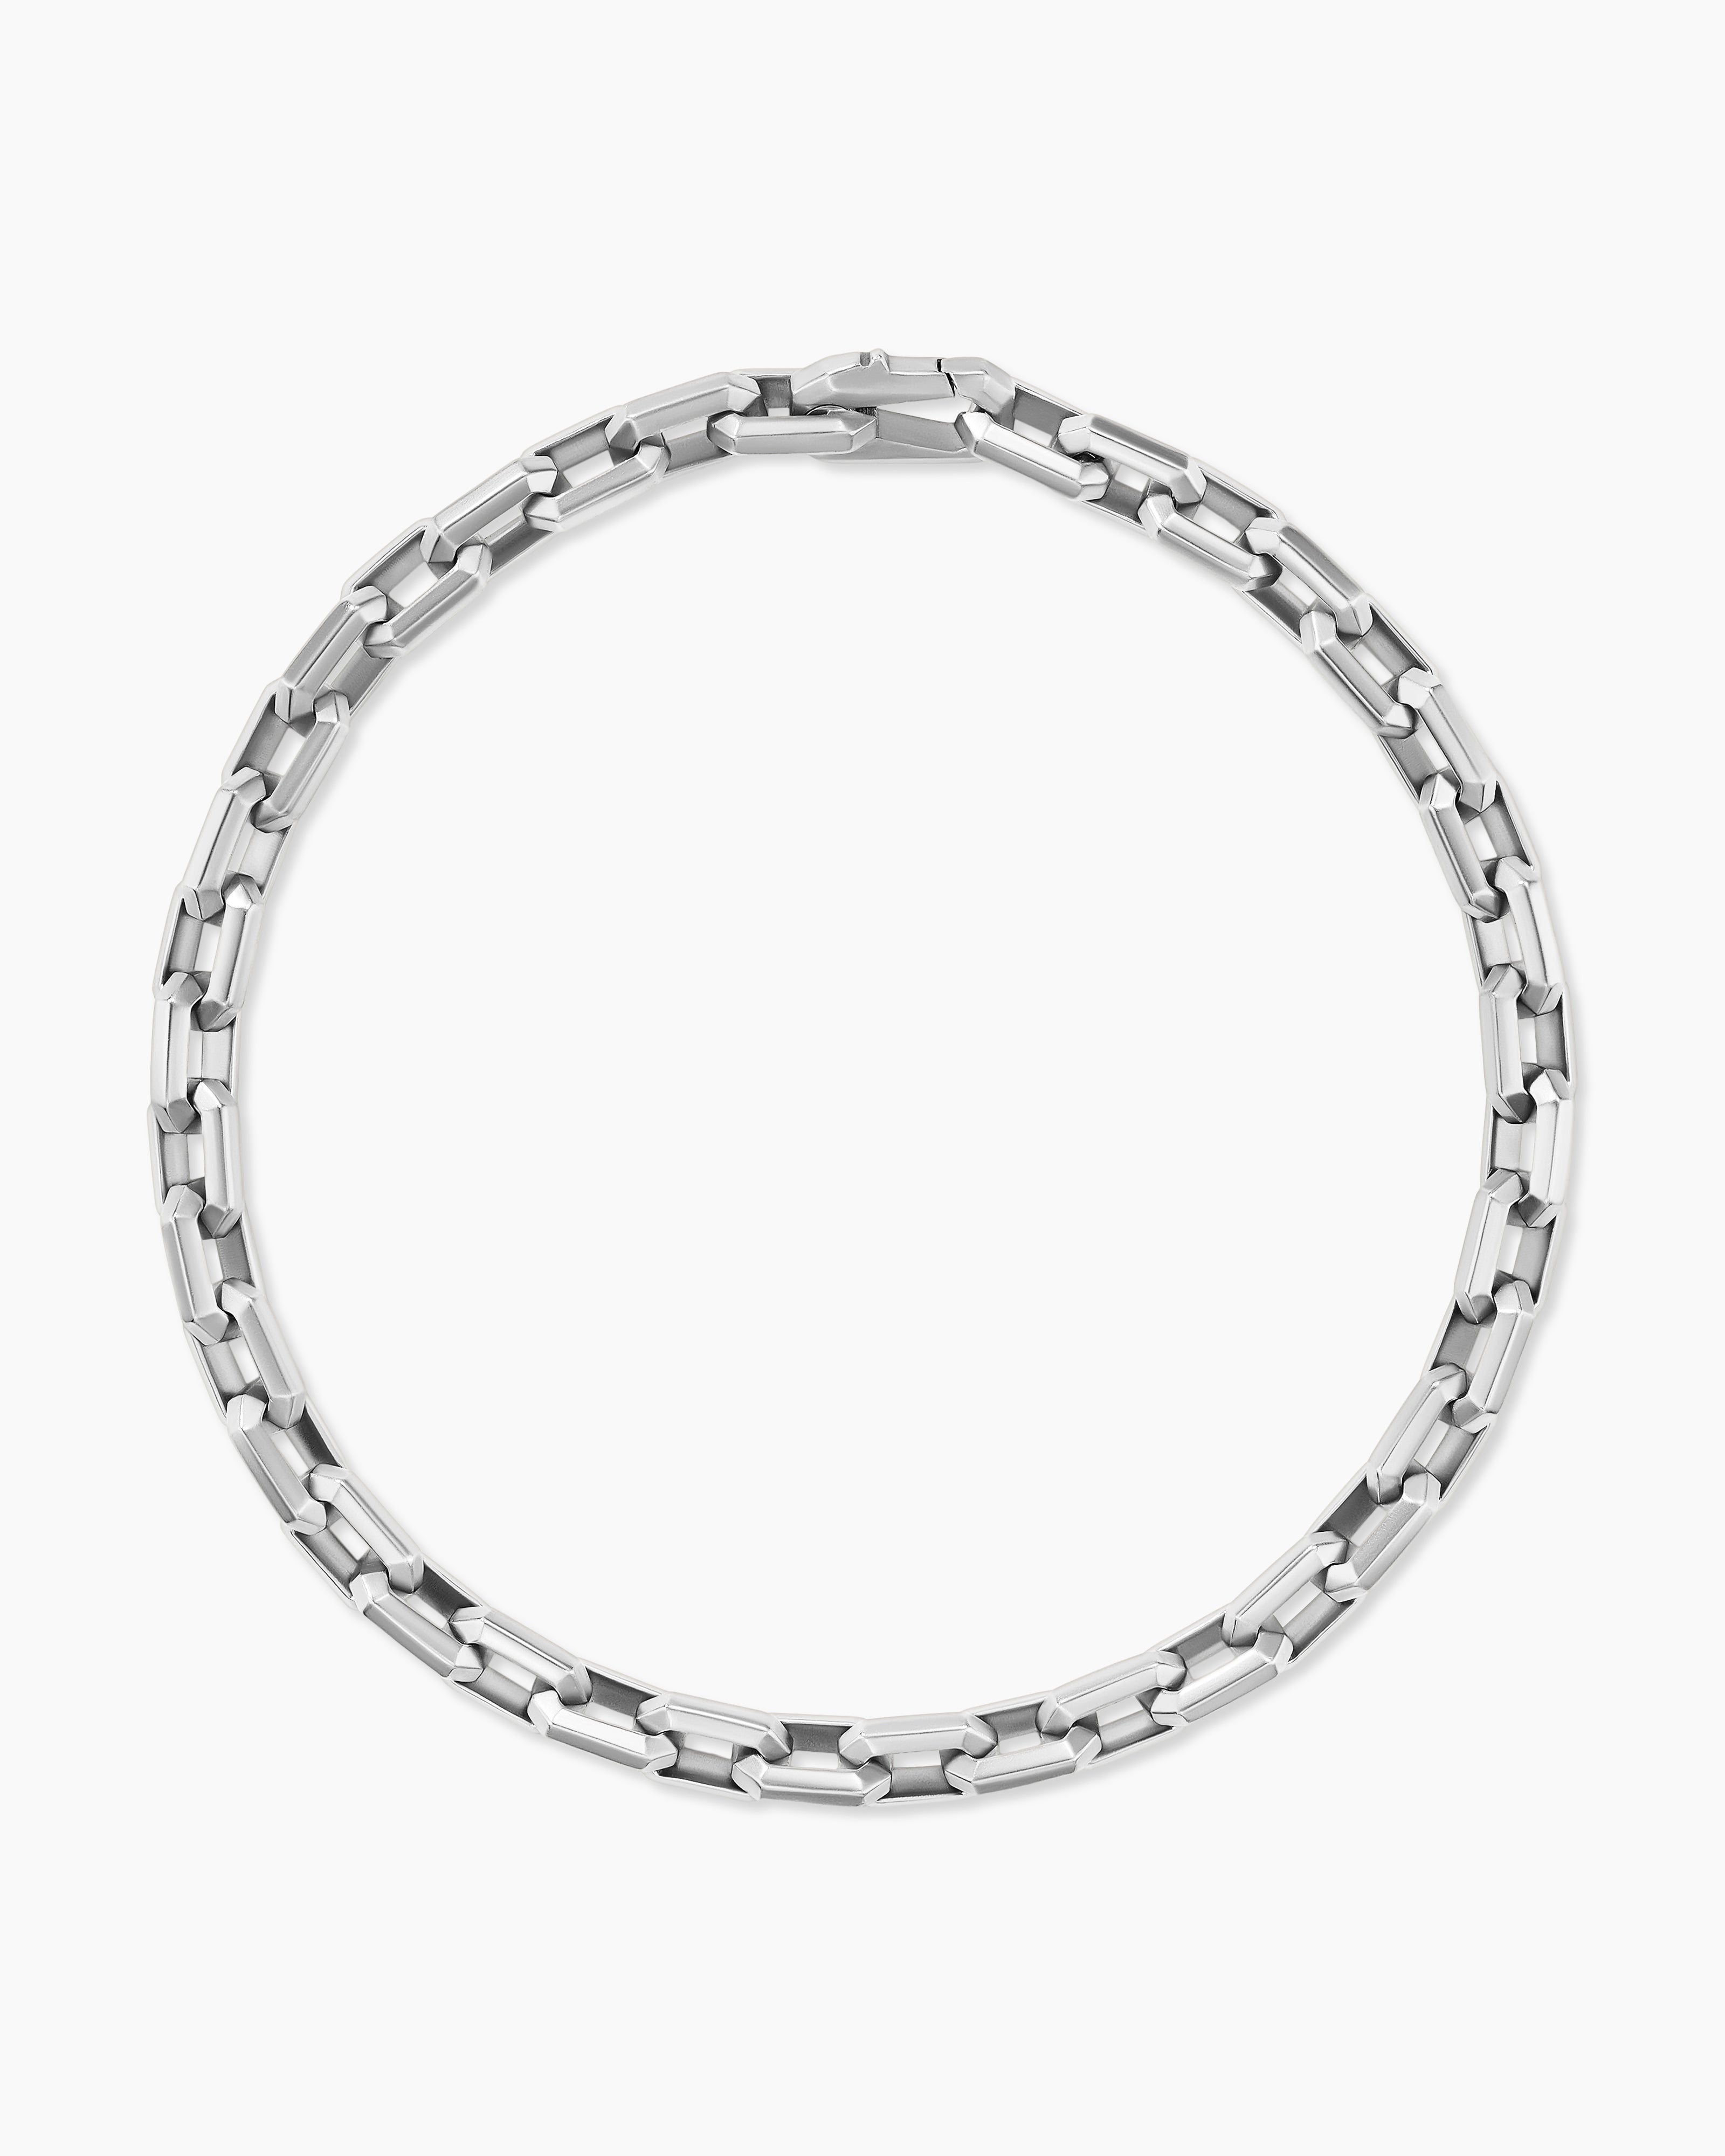 David Yurman Streamline Heirloom Link Bracelet in Sterling Silver | Medium